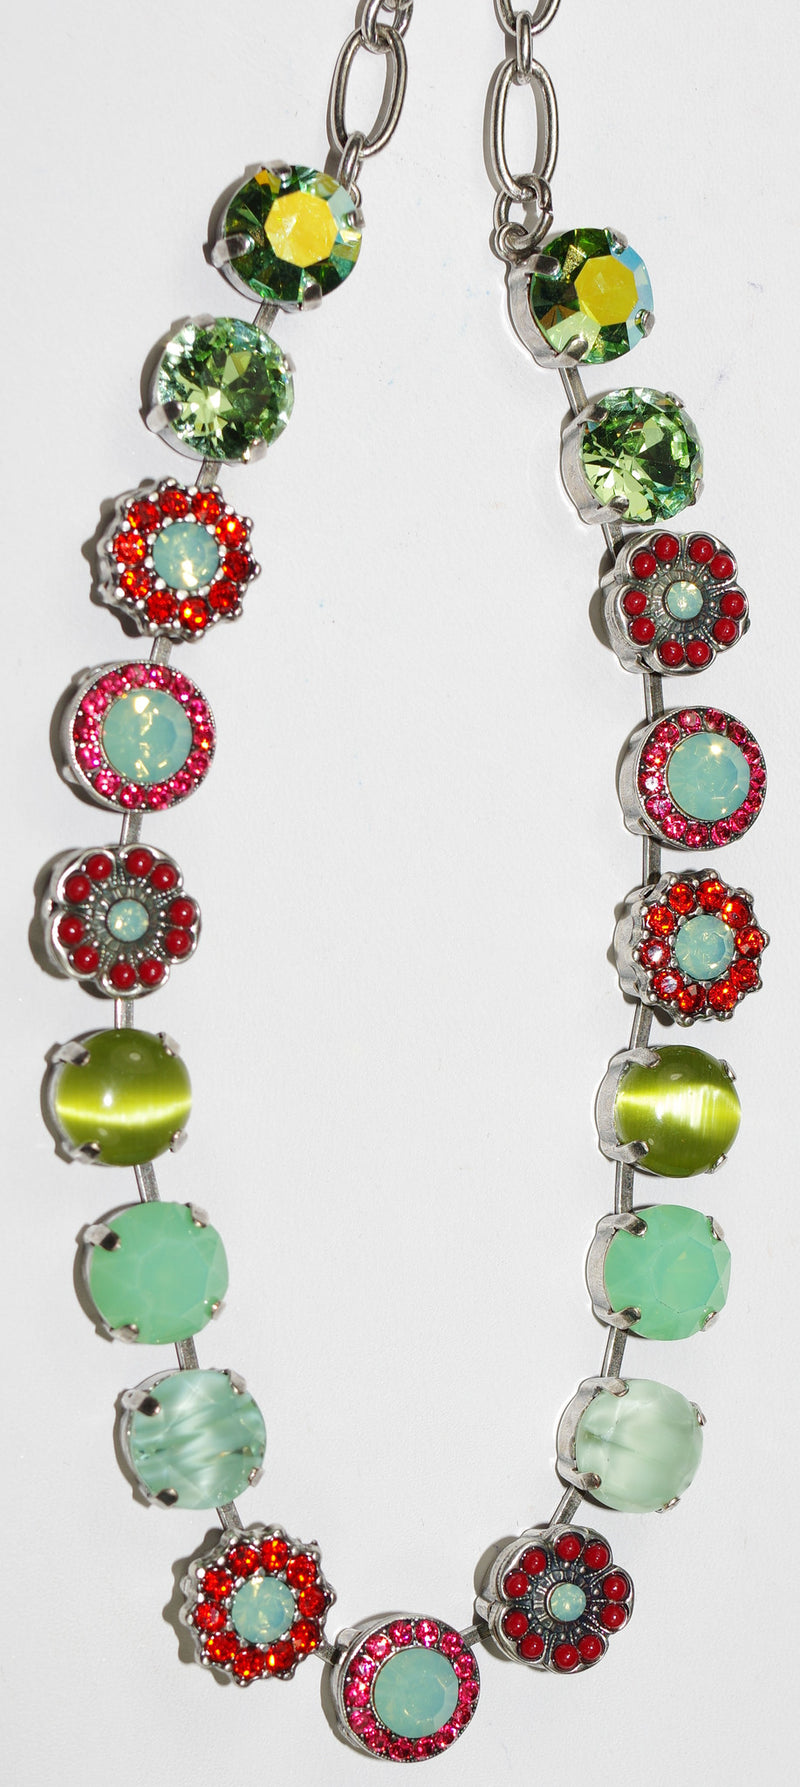 MARIANA NECKLACE MYRRH SOPHIA: pacific opal, orange stones in silver setting, 18" adjustable chain